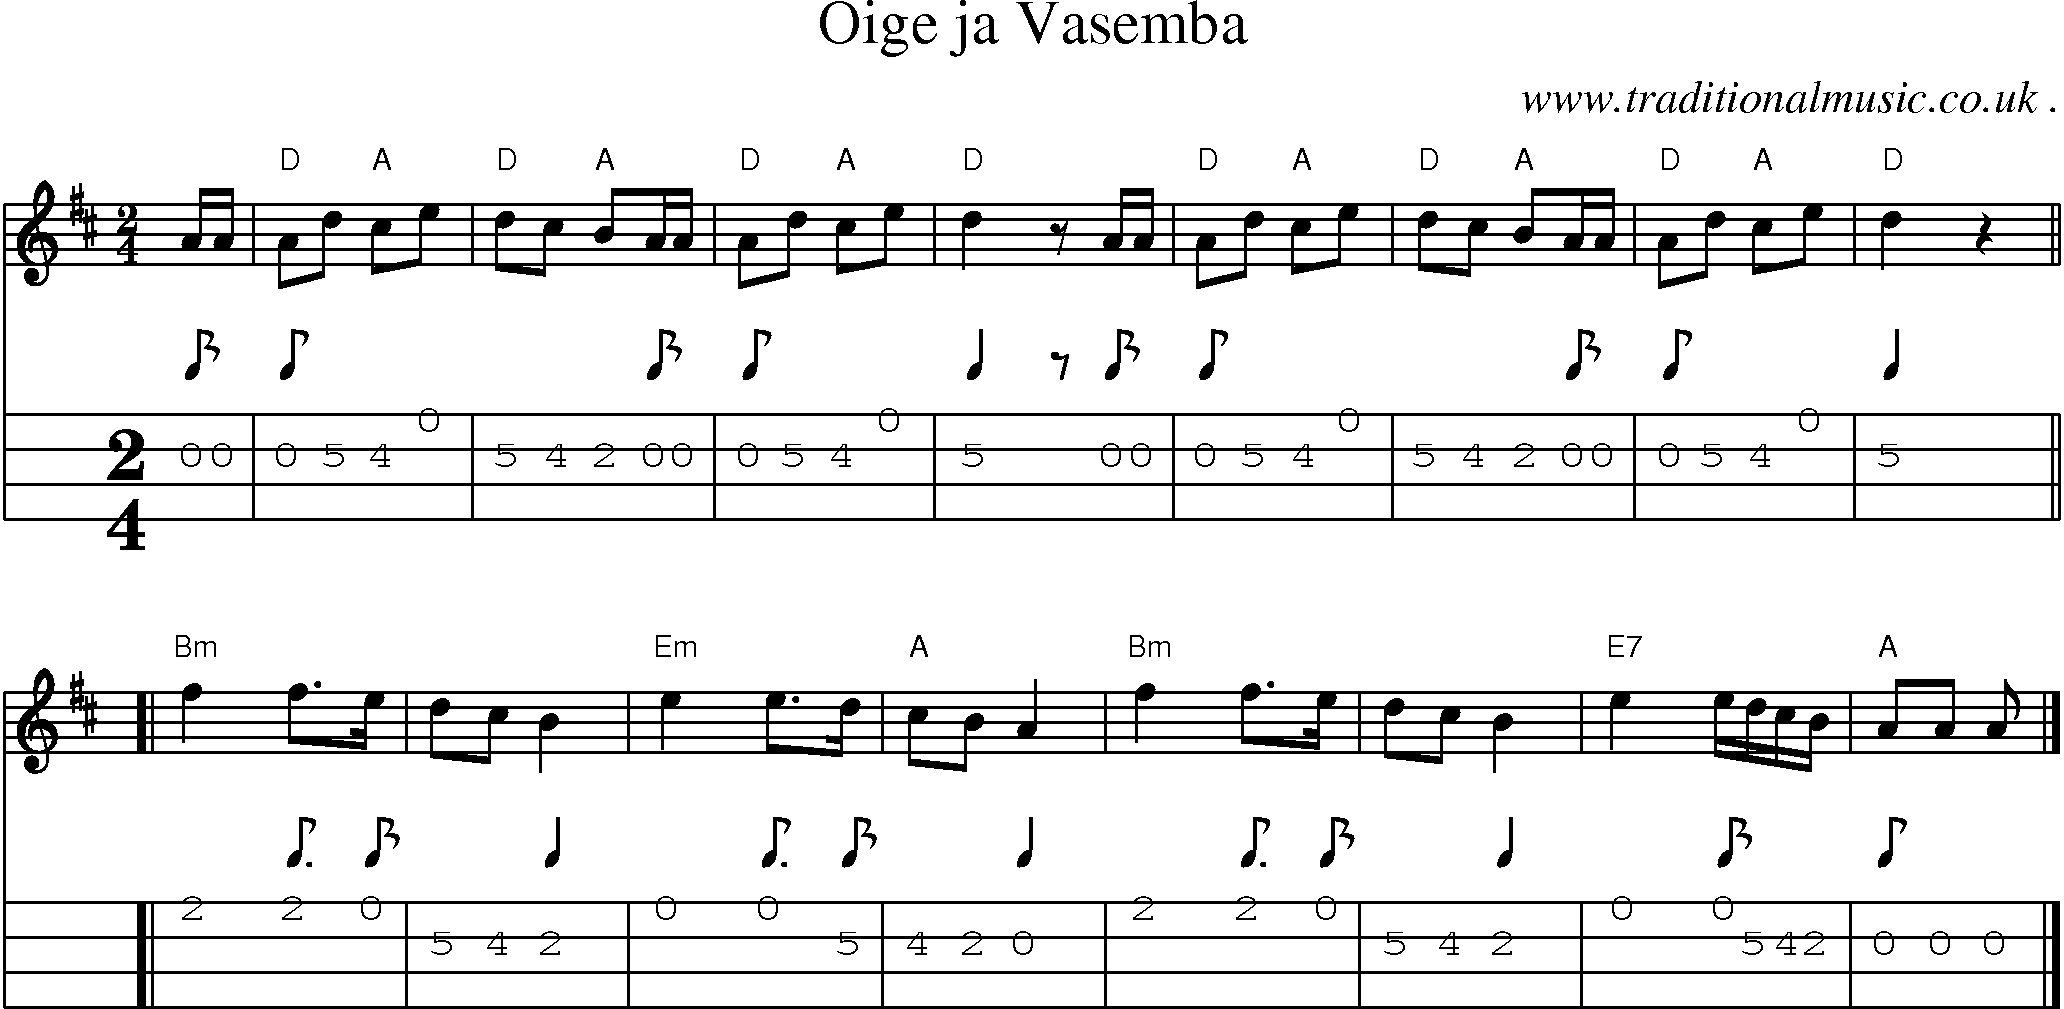 Sheet-music  score, Chords and Mandolin Tabs for Oige Ja Vasemba